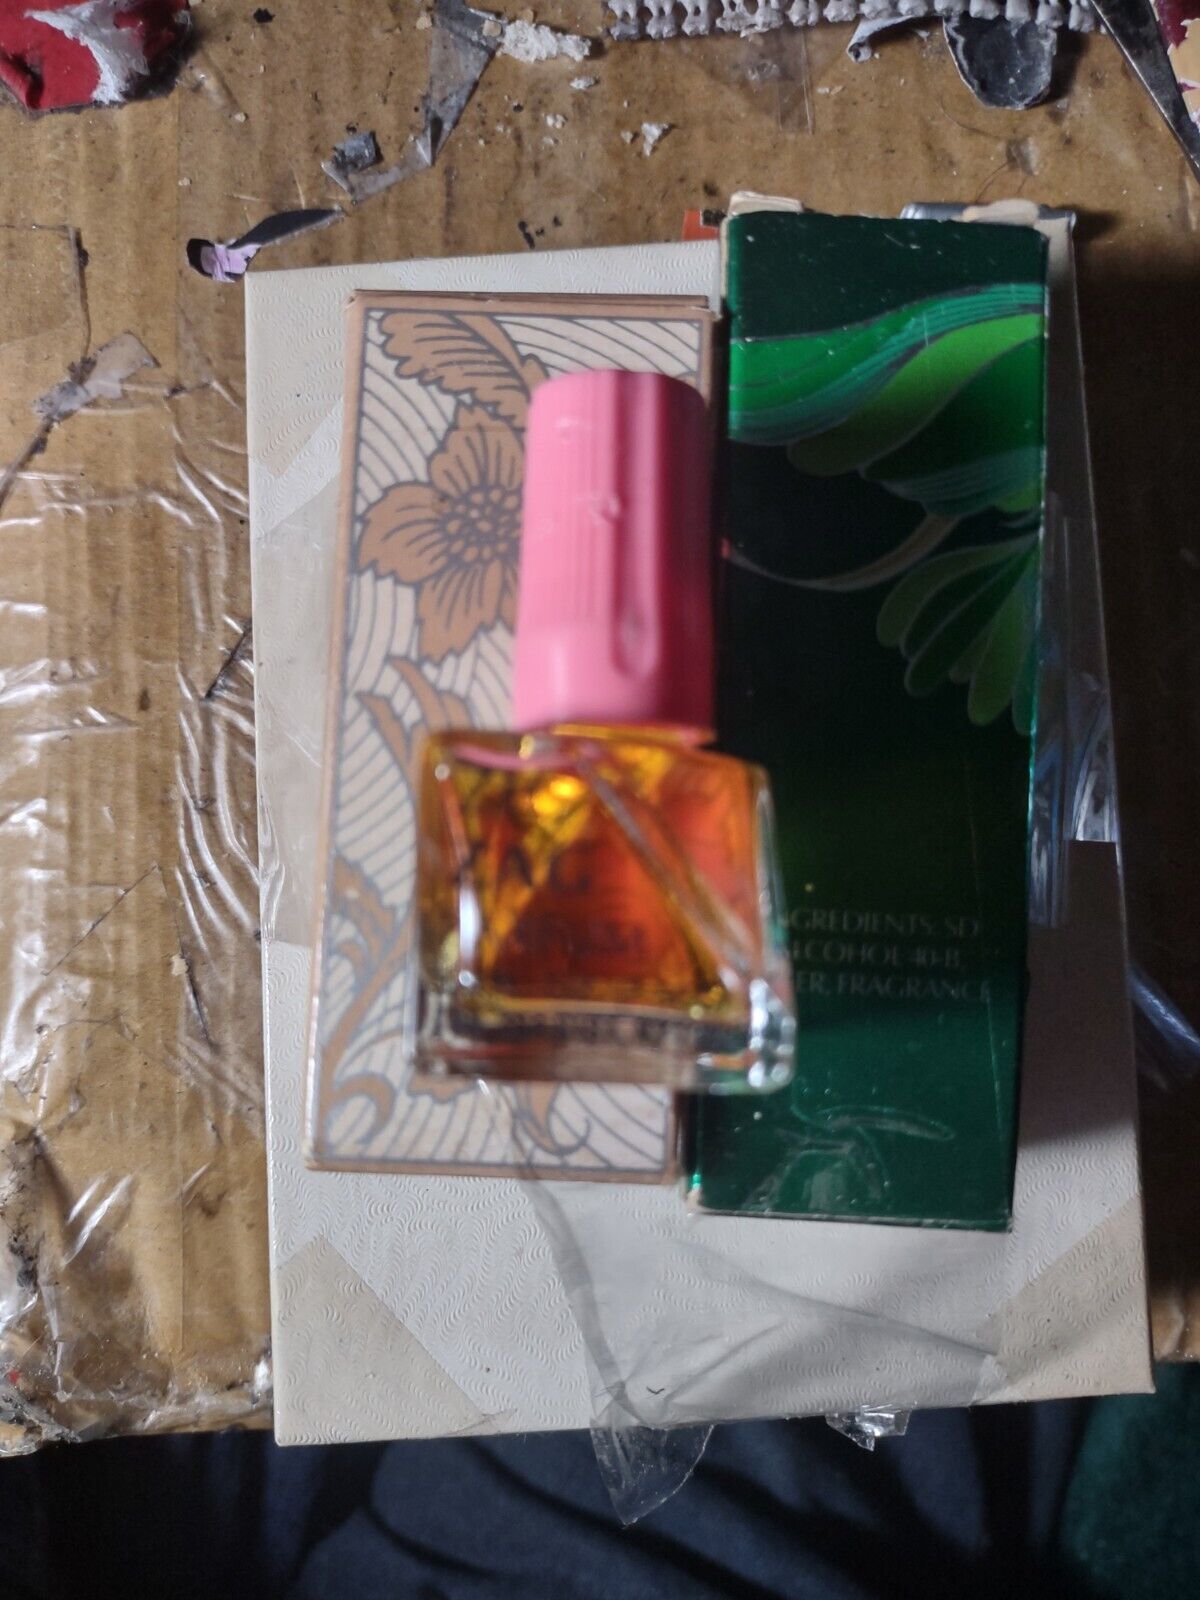 Vintage Rare Zig Zag Perfume Zsa Zsa Gabor Pink Top Bottle 1/4 oz Full No Box